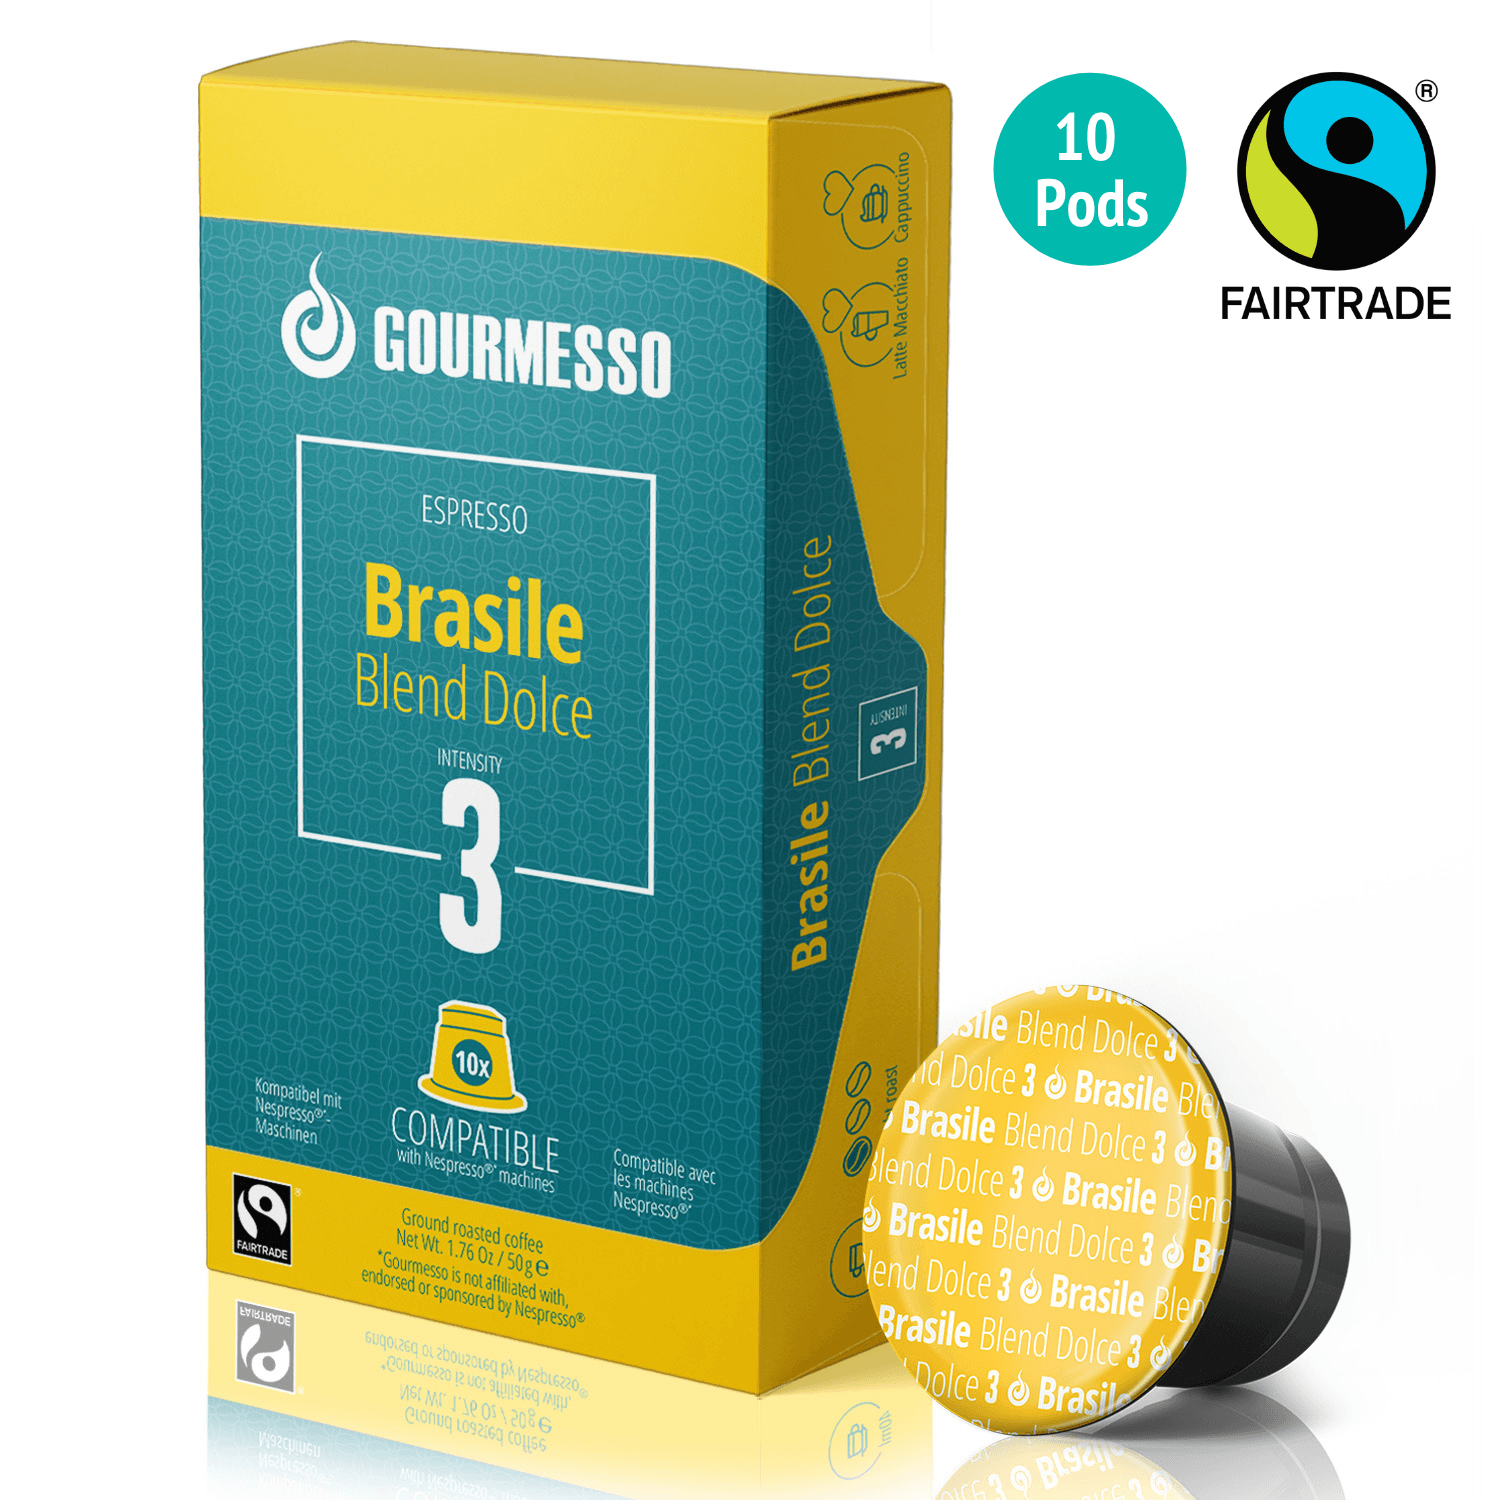 Gourmesso Brasile Blend Dolce - Fairtrade - 10 Pods-Gourmesso